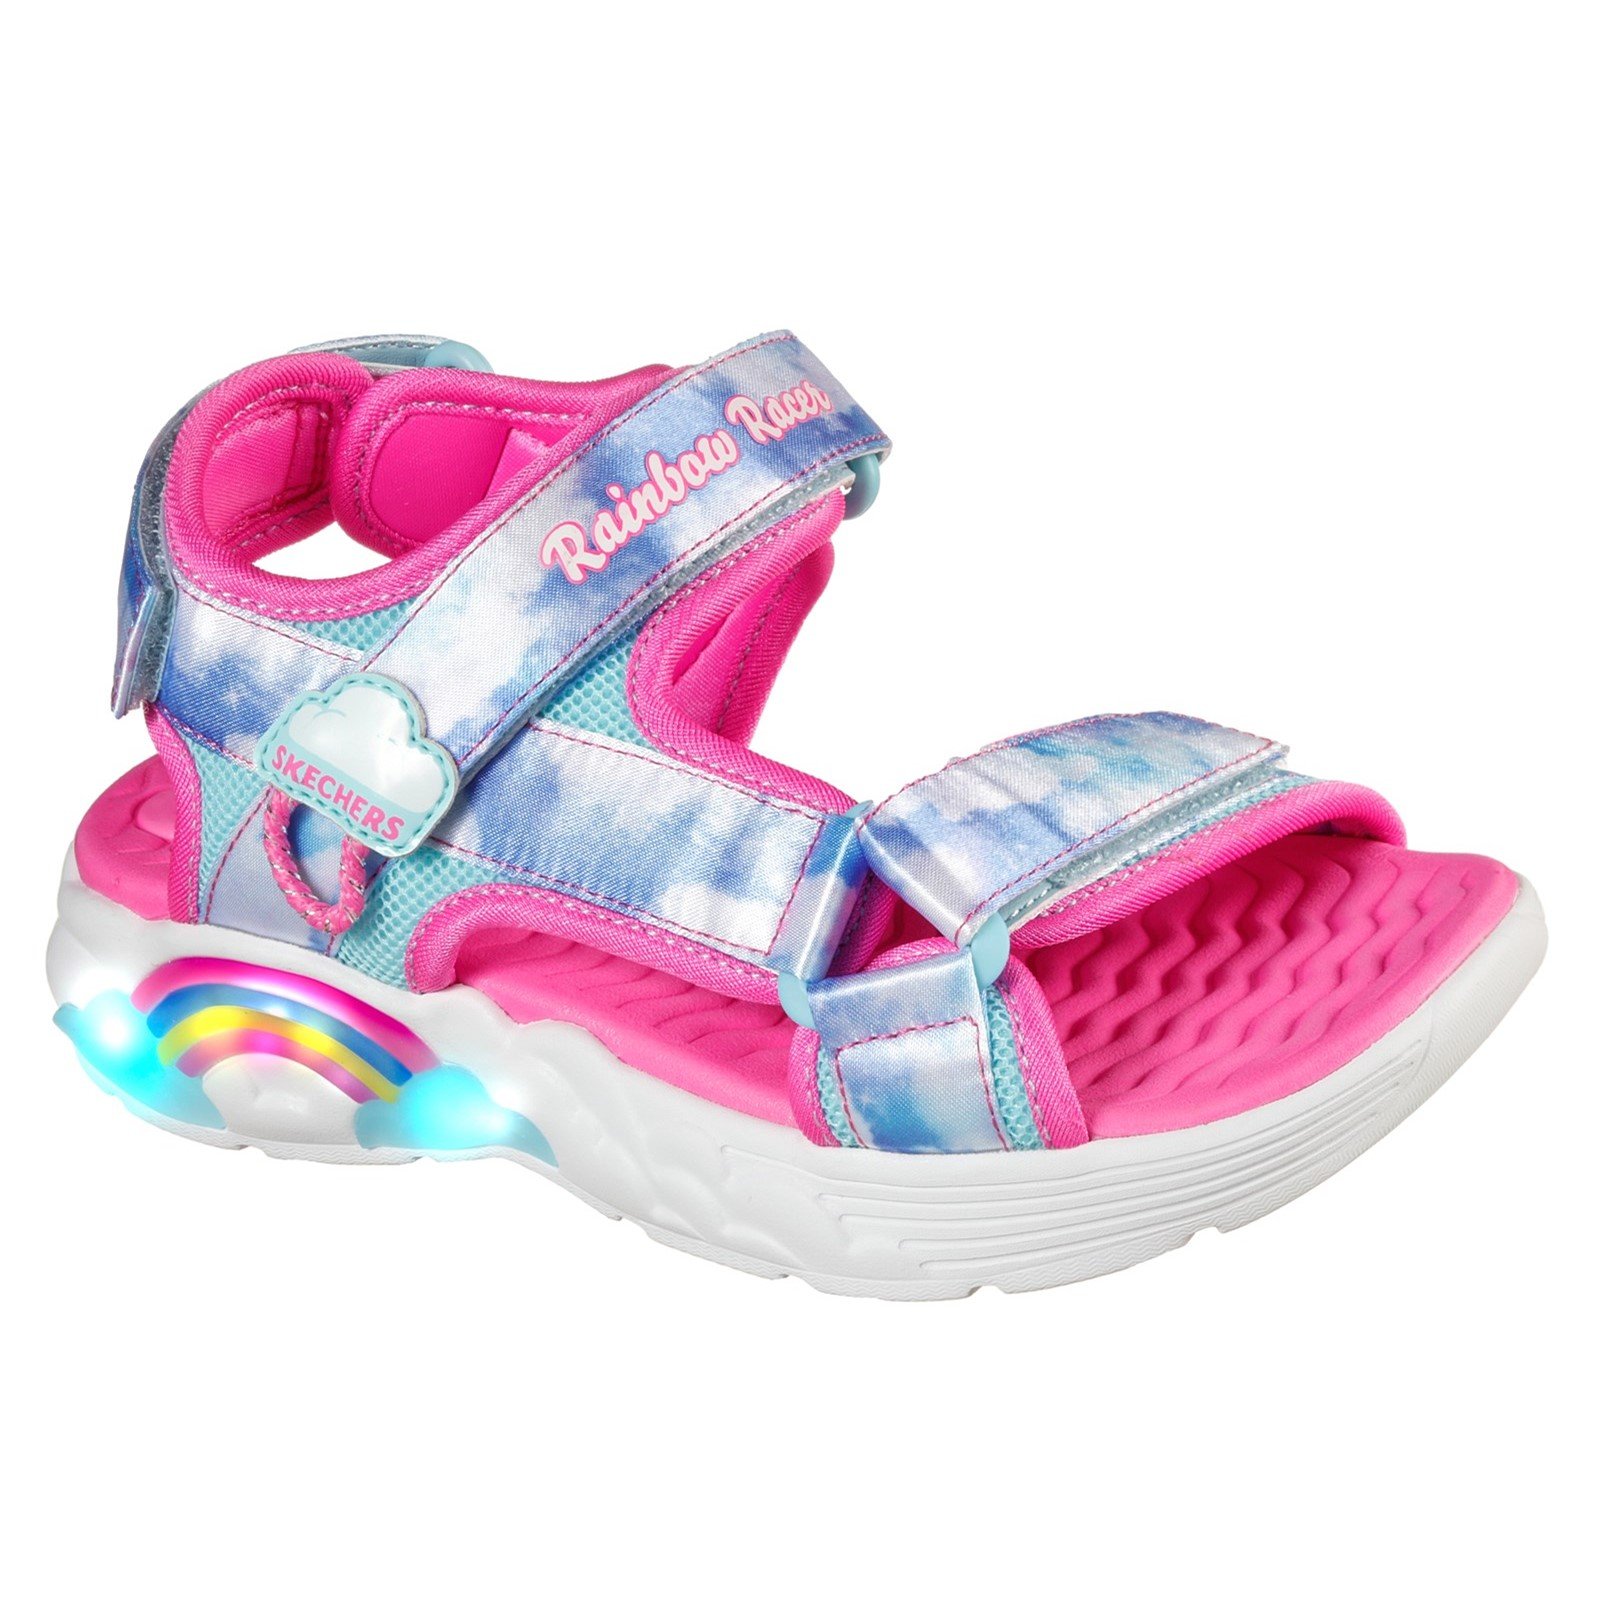 Skechers Unisex Rainbow Racer Summer Sky Beach Sandals Multicolor 32096 - Pink/Blue Textile 13